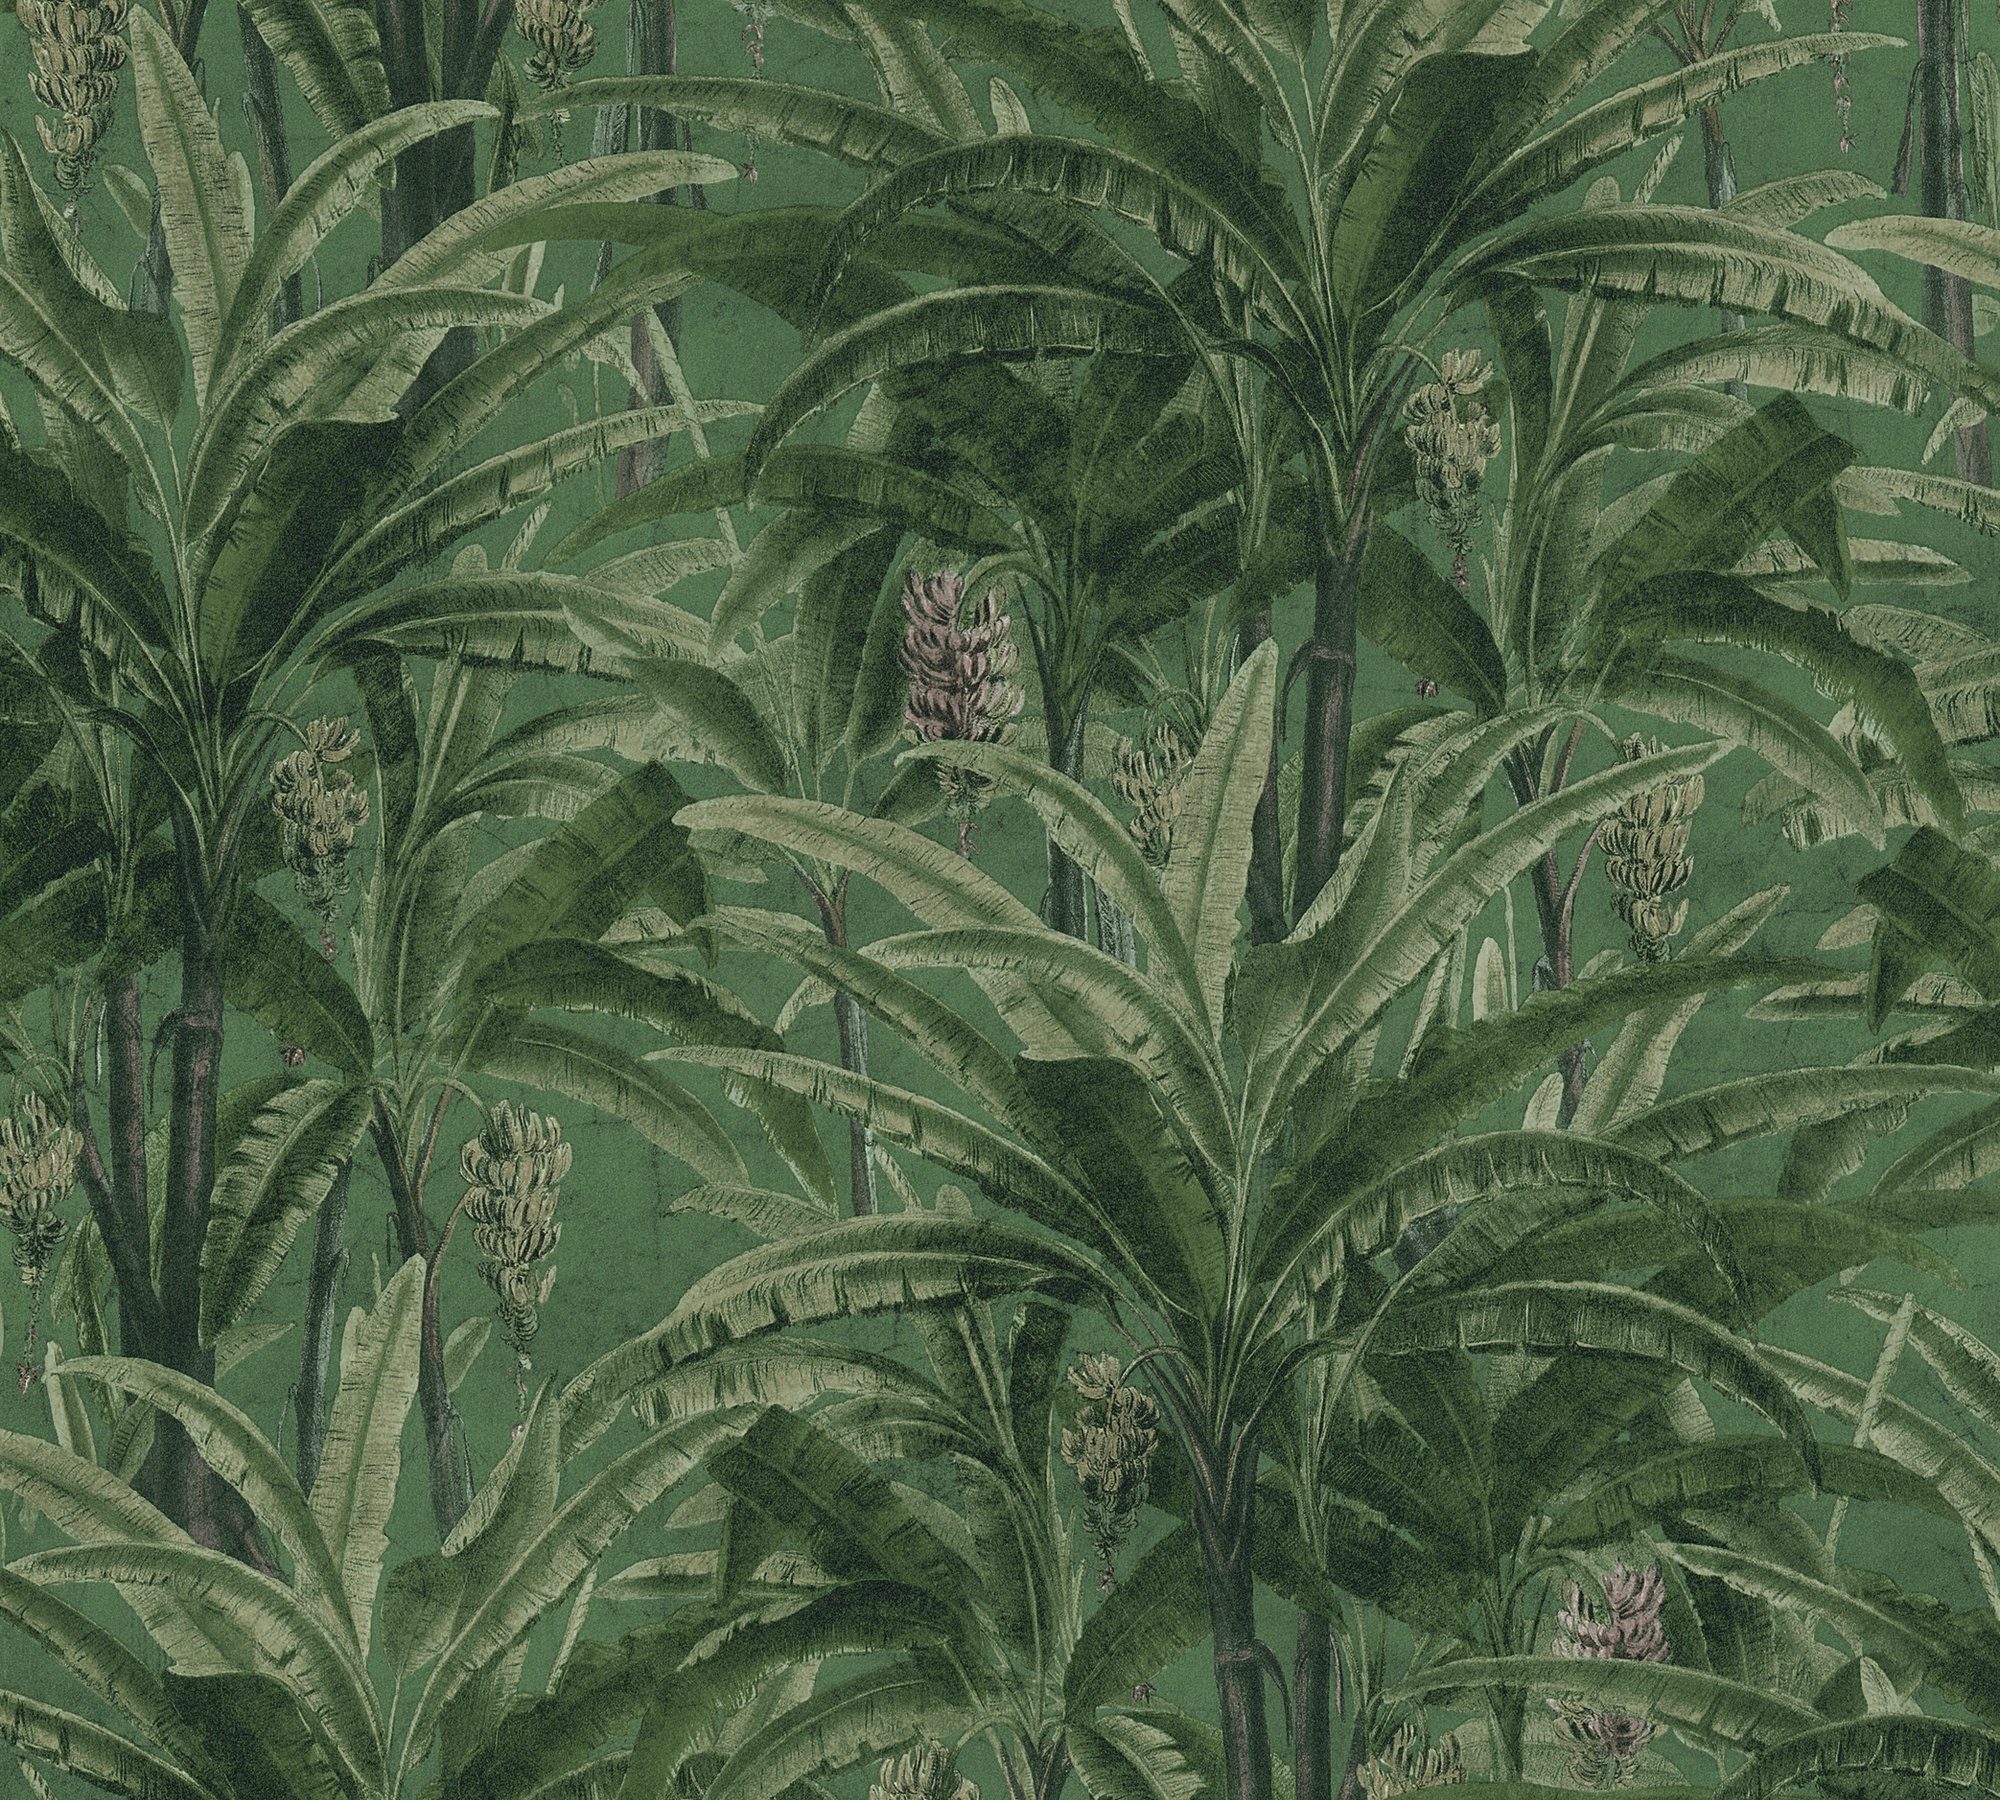 mit Dschungel Création grün Tapete A.S. Palmen Optik, Palmenprint Vliestapete Greenery in Dschungeltapete floral,